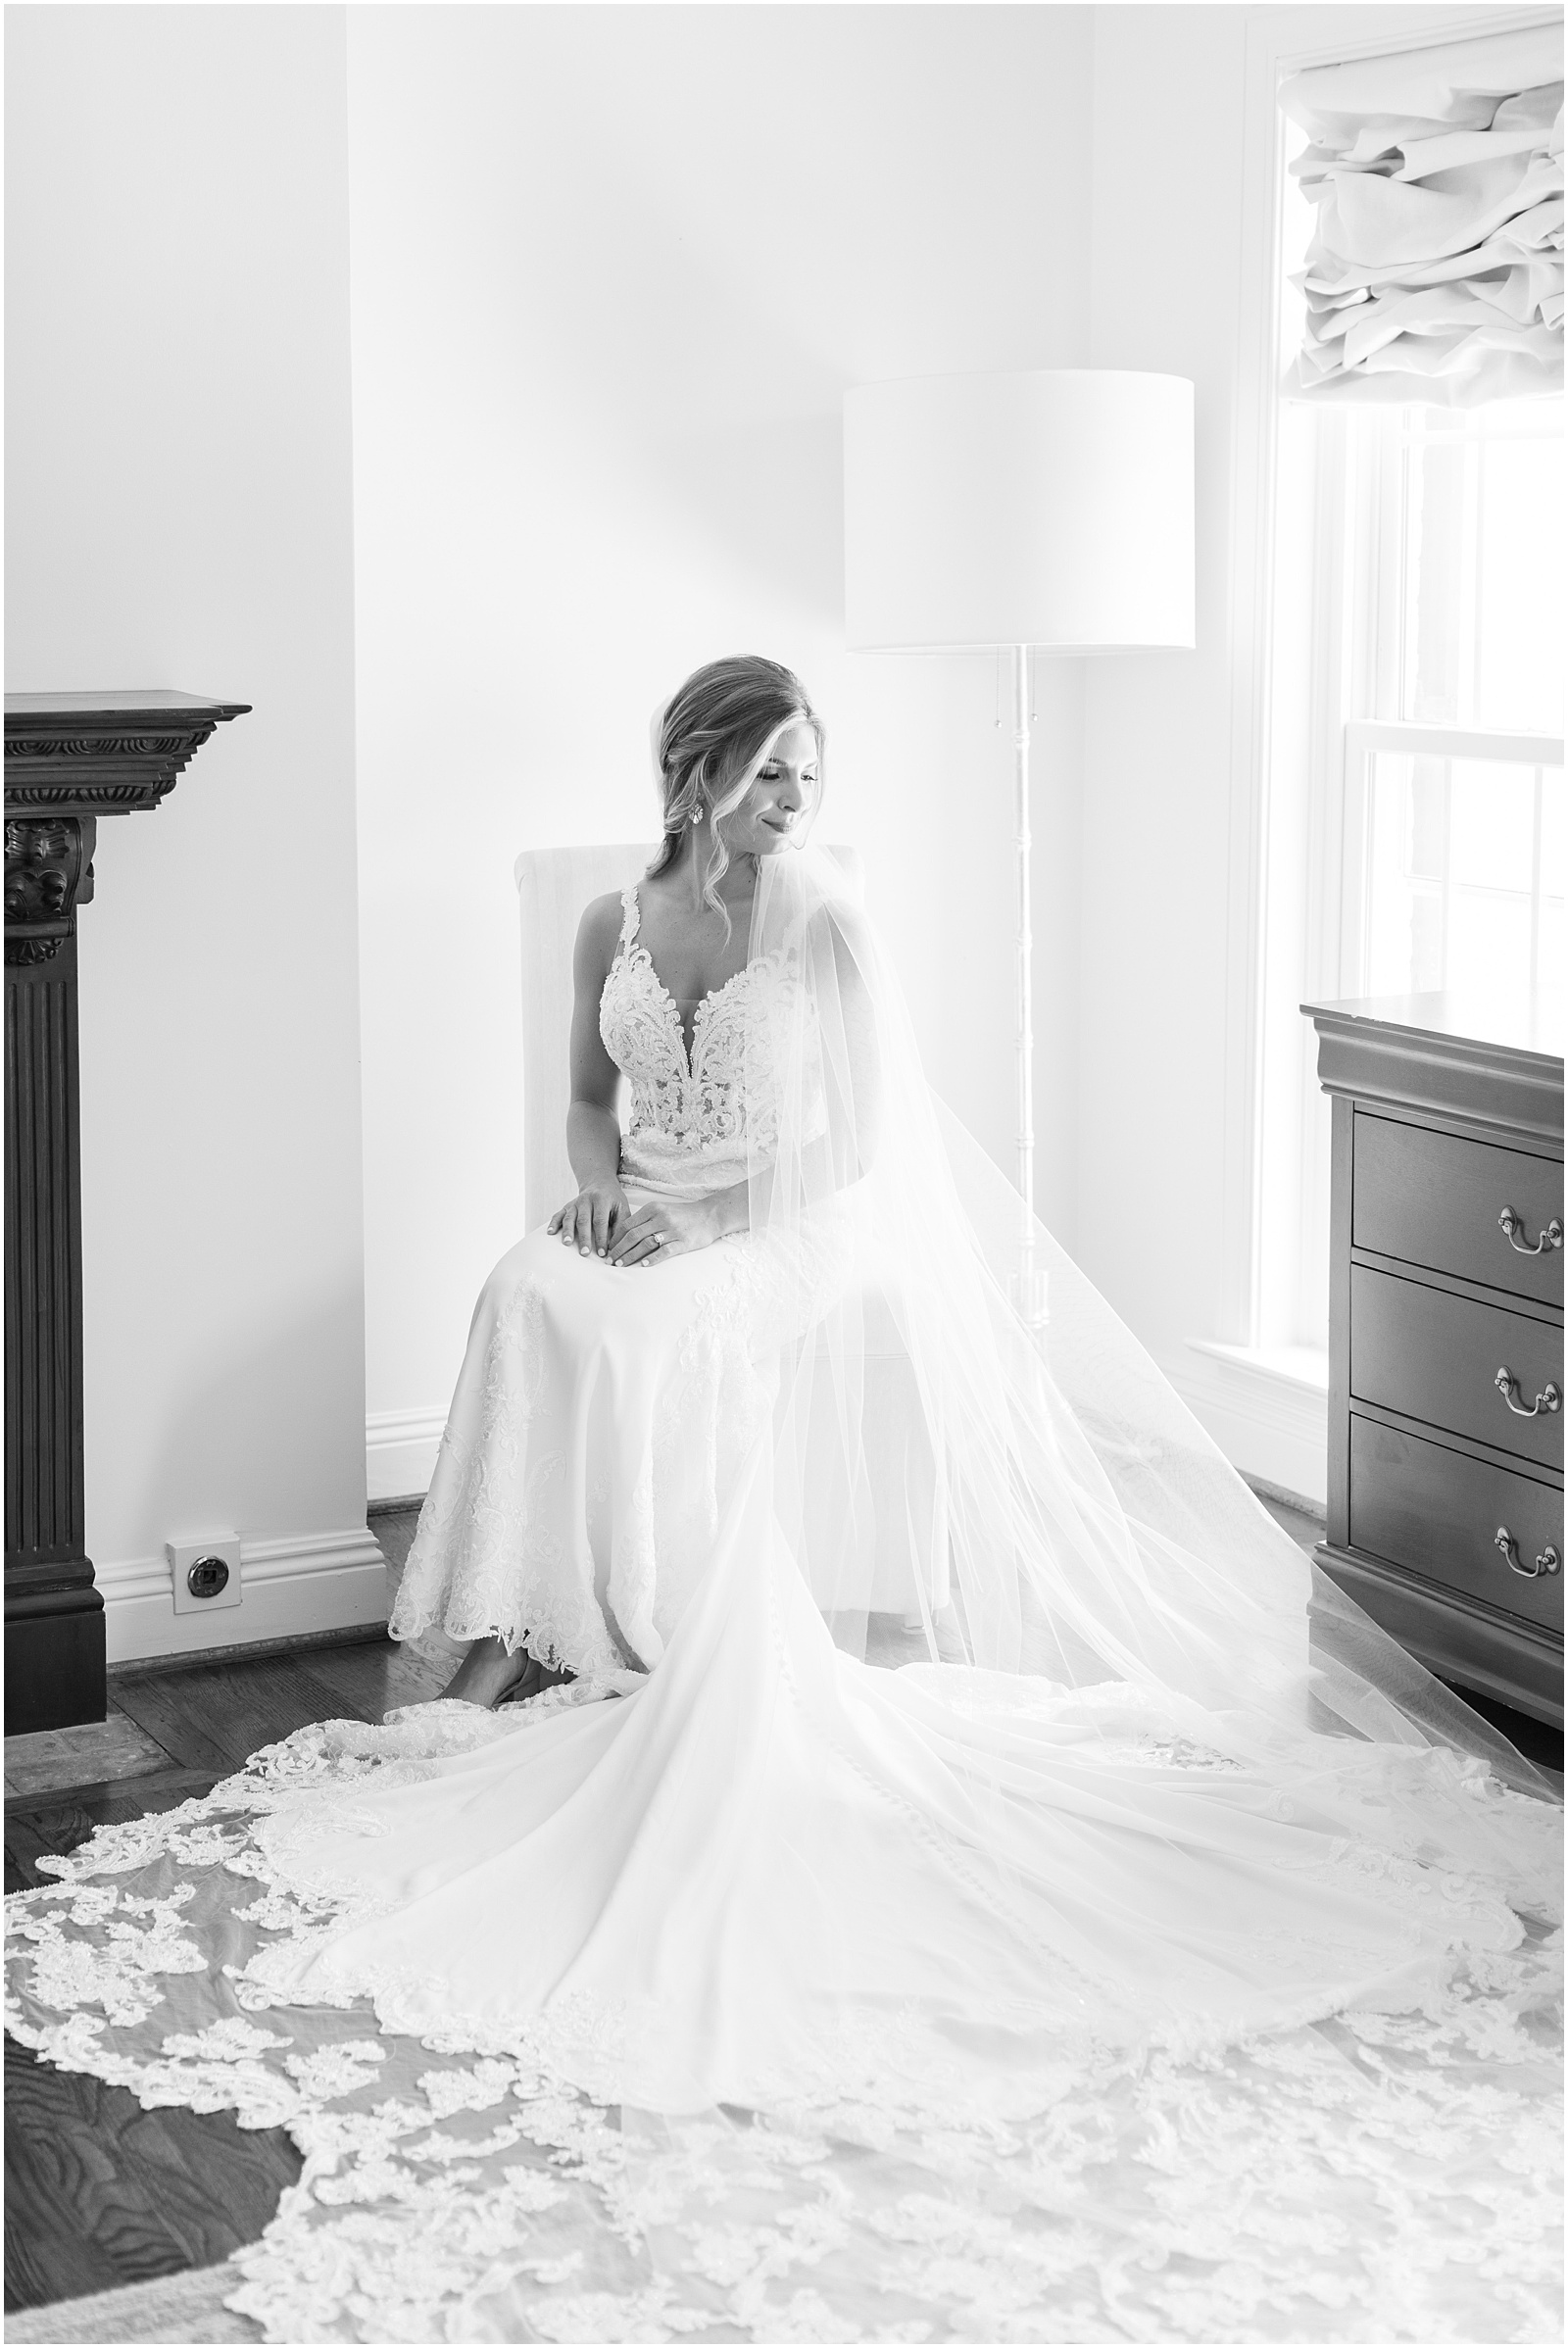 Marlye + Peyton | Married - Elizabeth Gelineau Photography